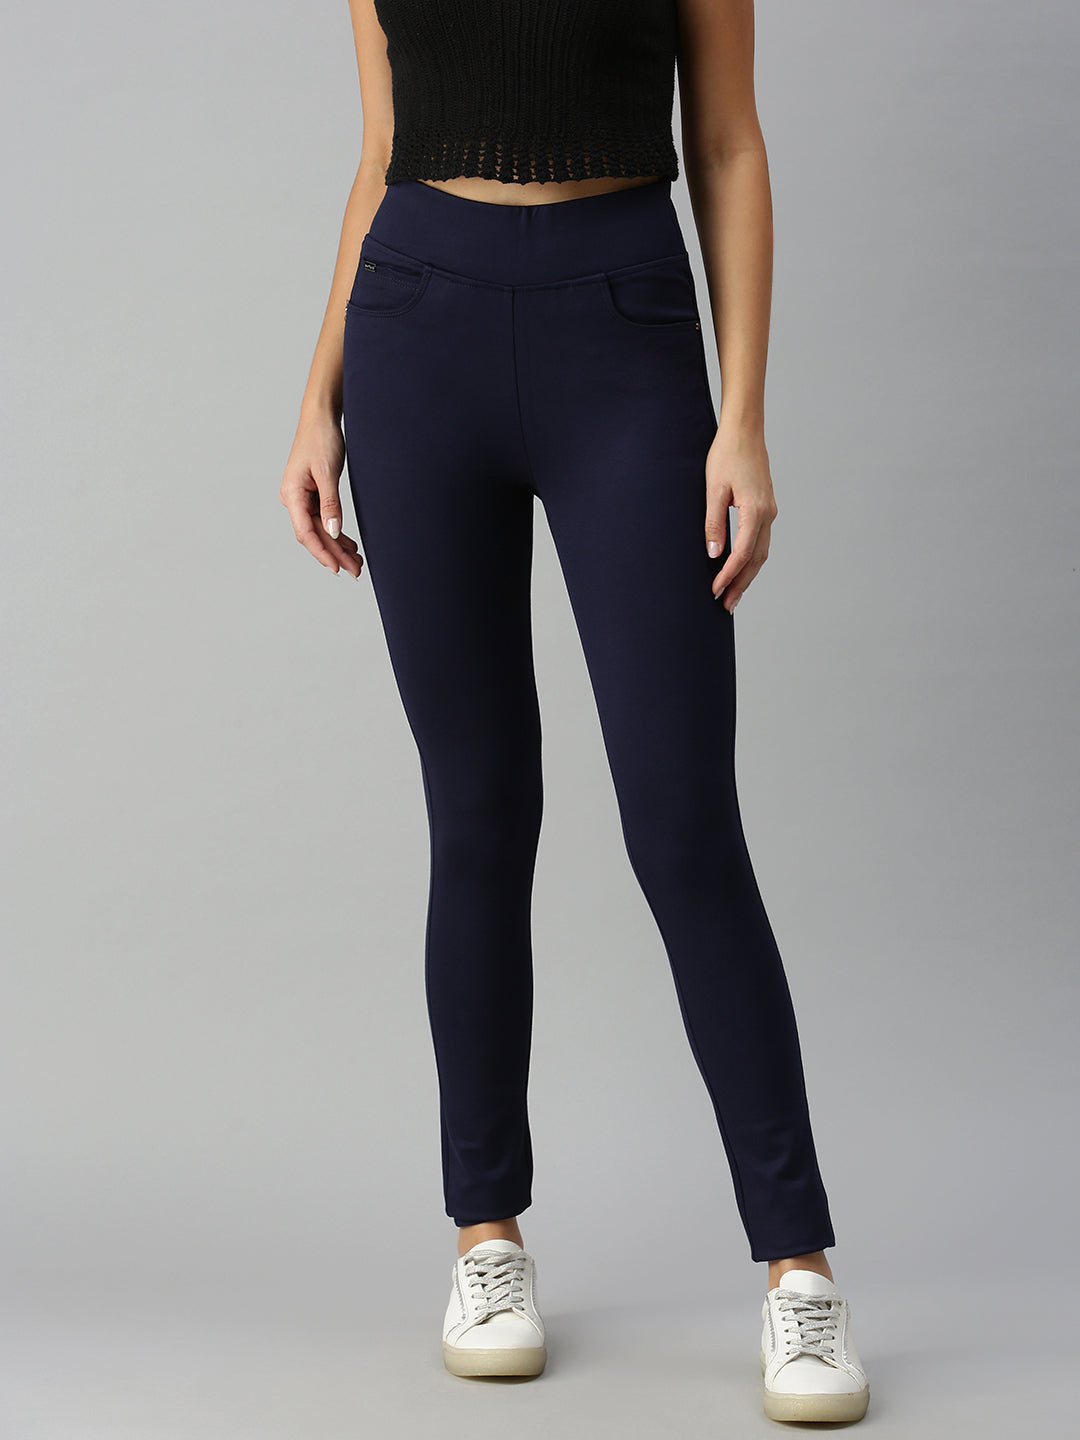 Women's Navy Blue Solid Denim Skinny Jeans